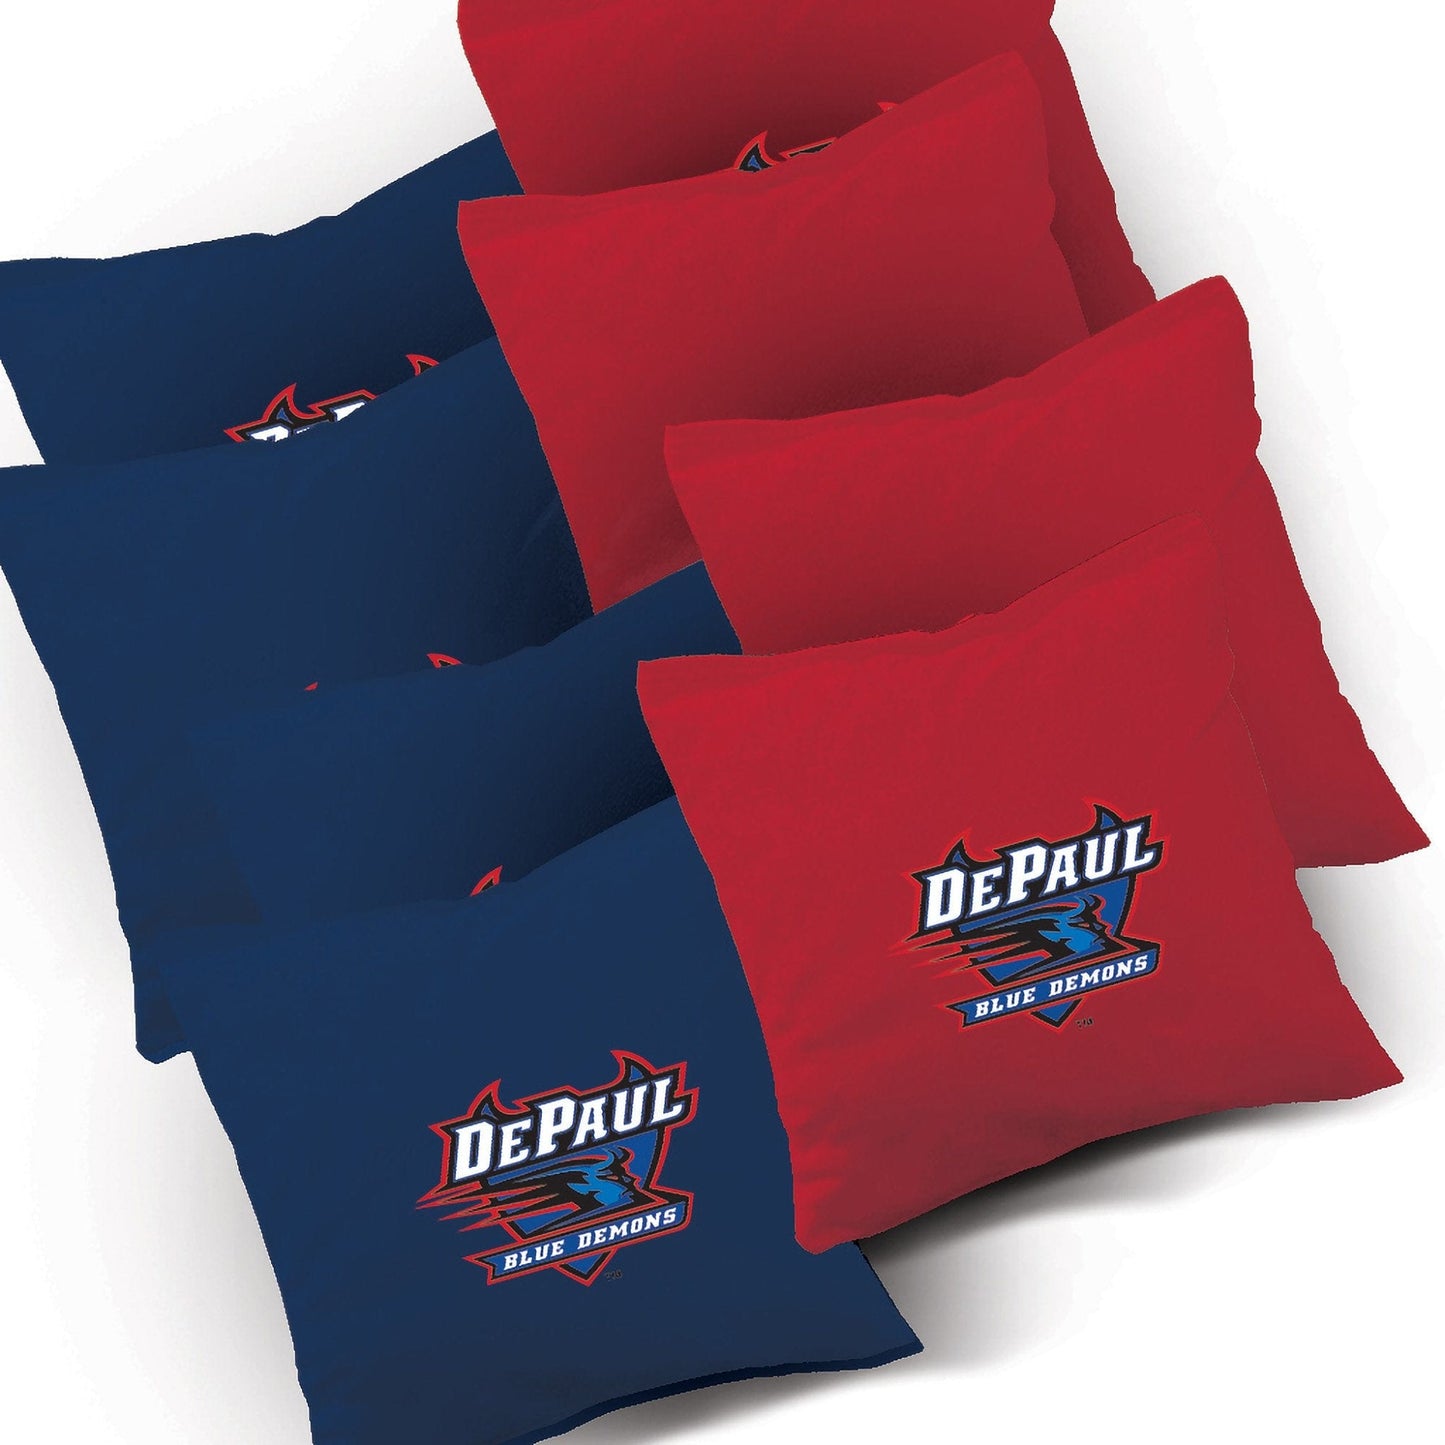 DePaul Stripe team logo corn hole bags